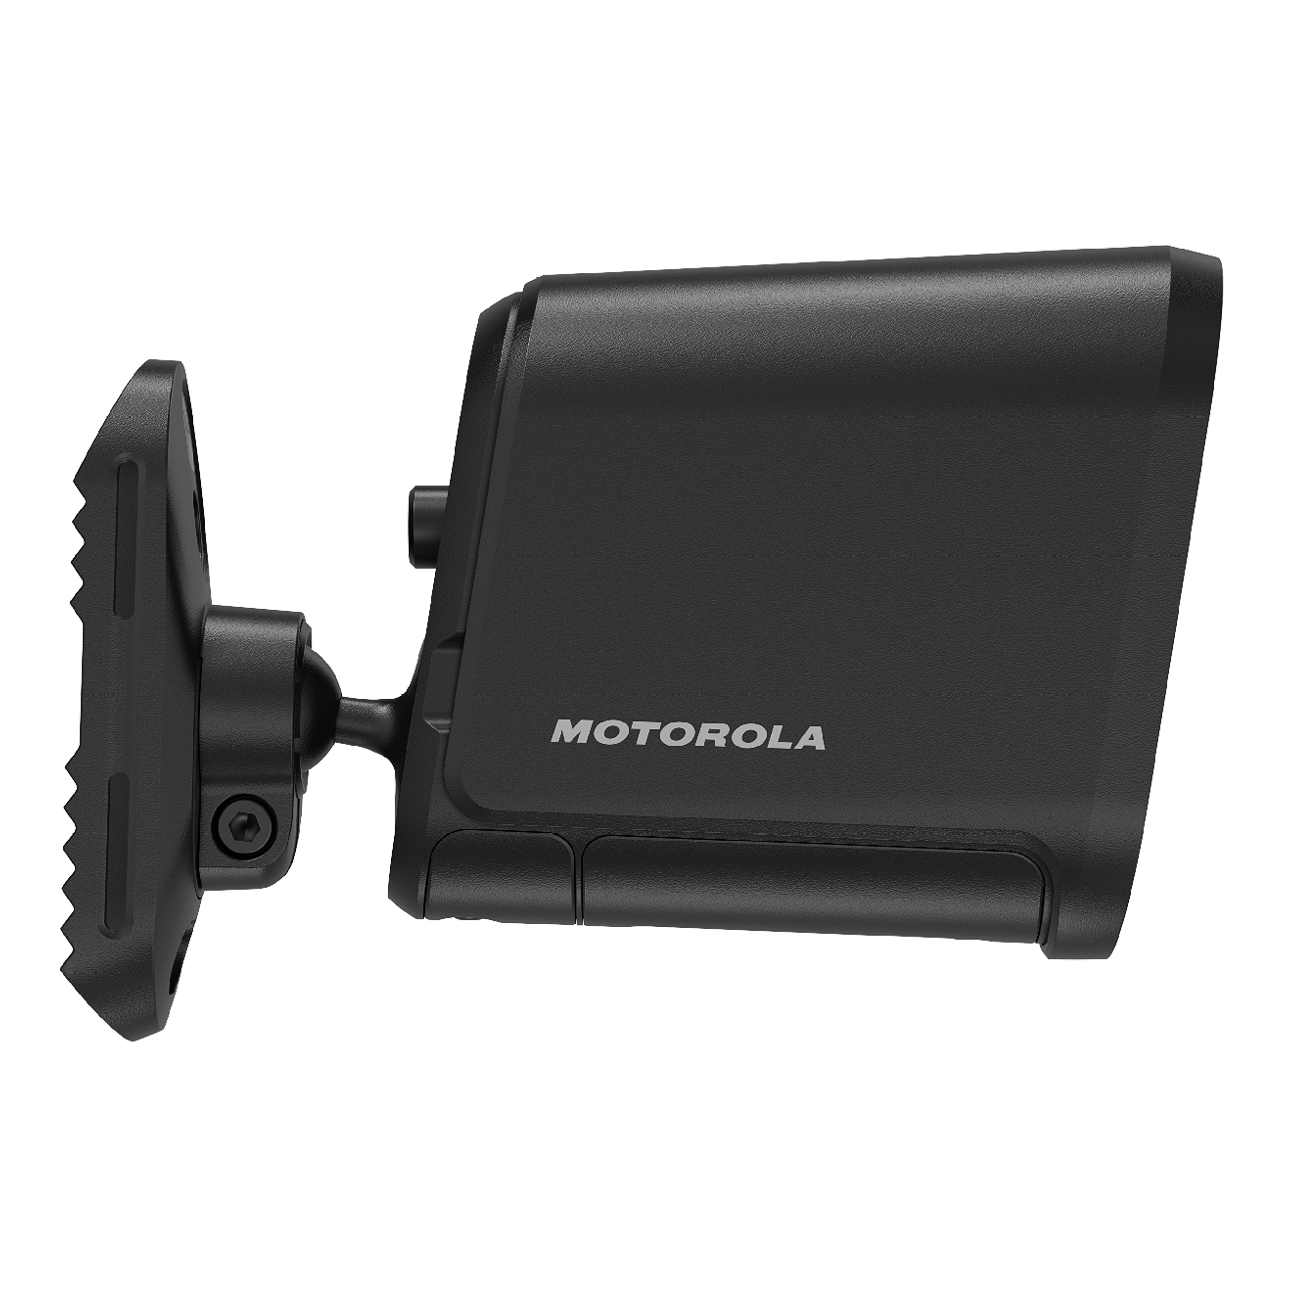 In-Car Video Camera Systems - Motorola Solutions